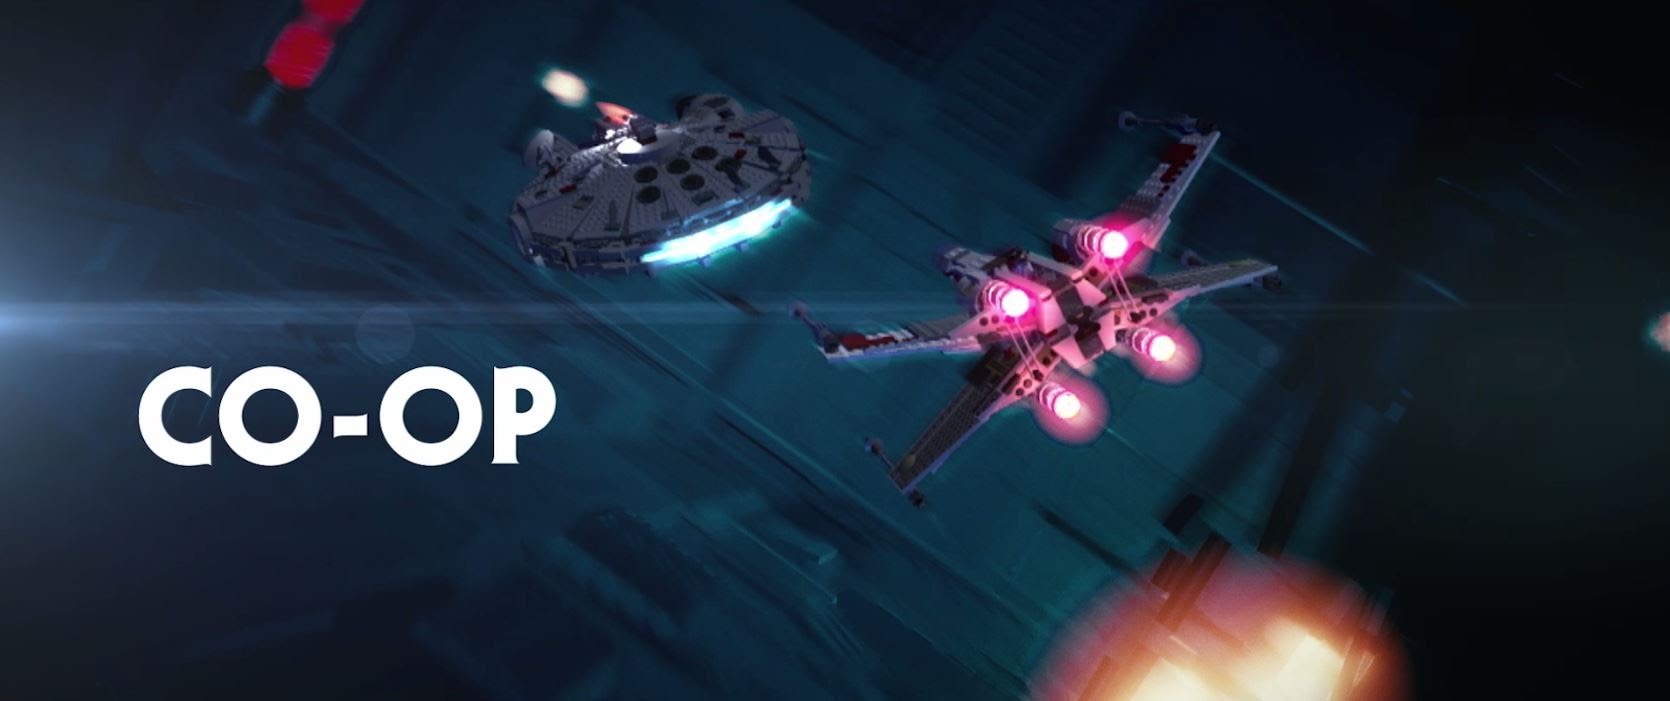 LEGO Star Wars: The Force Awakens | Co-Op